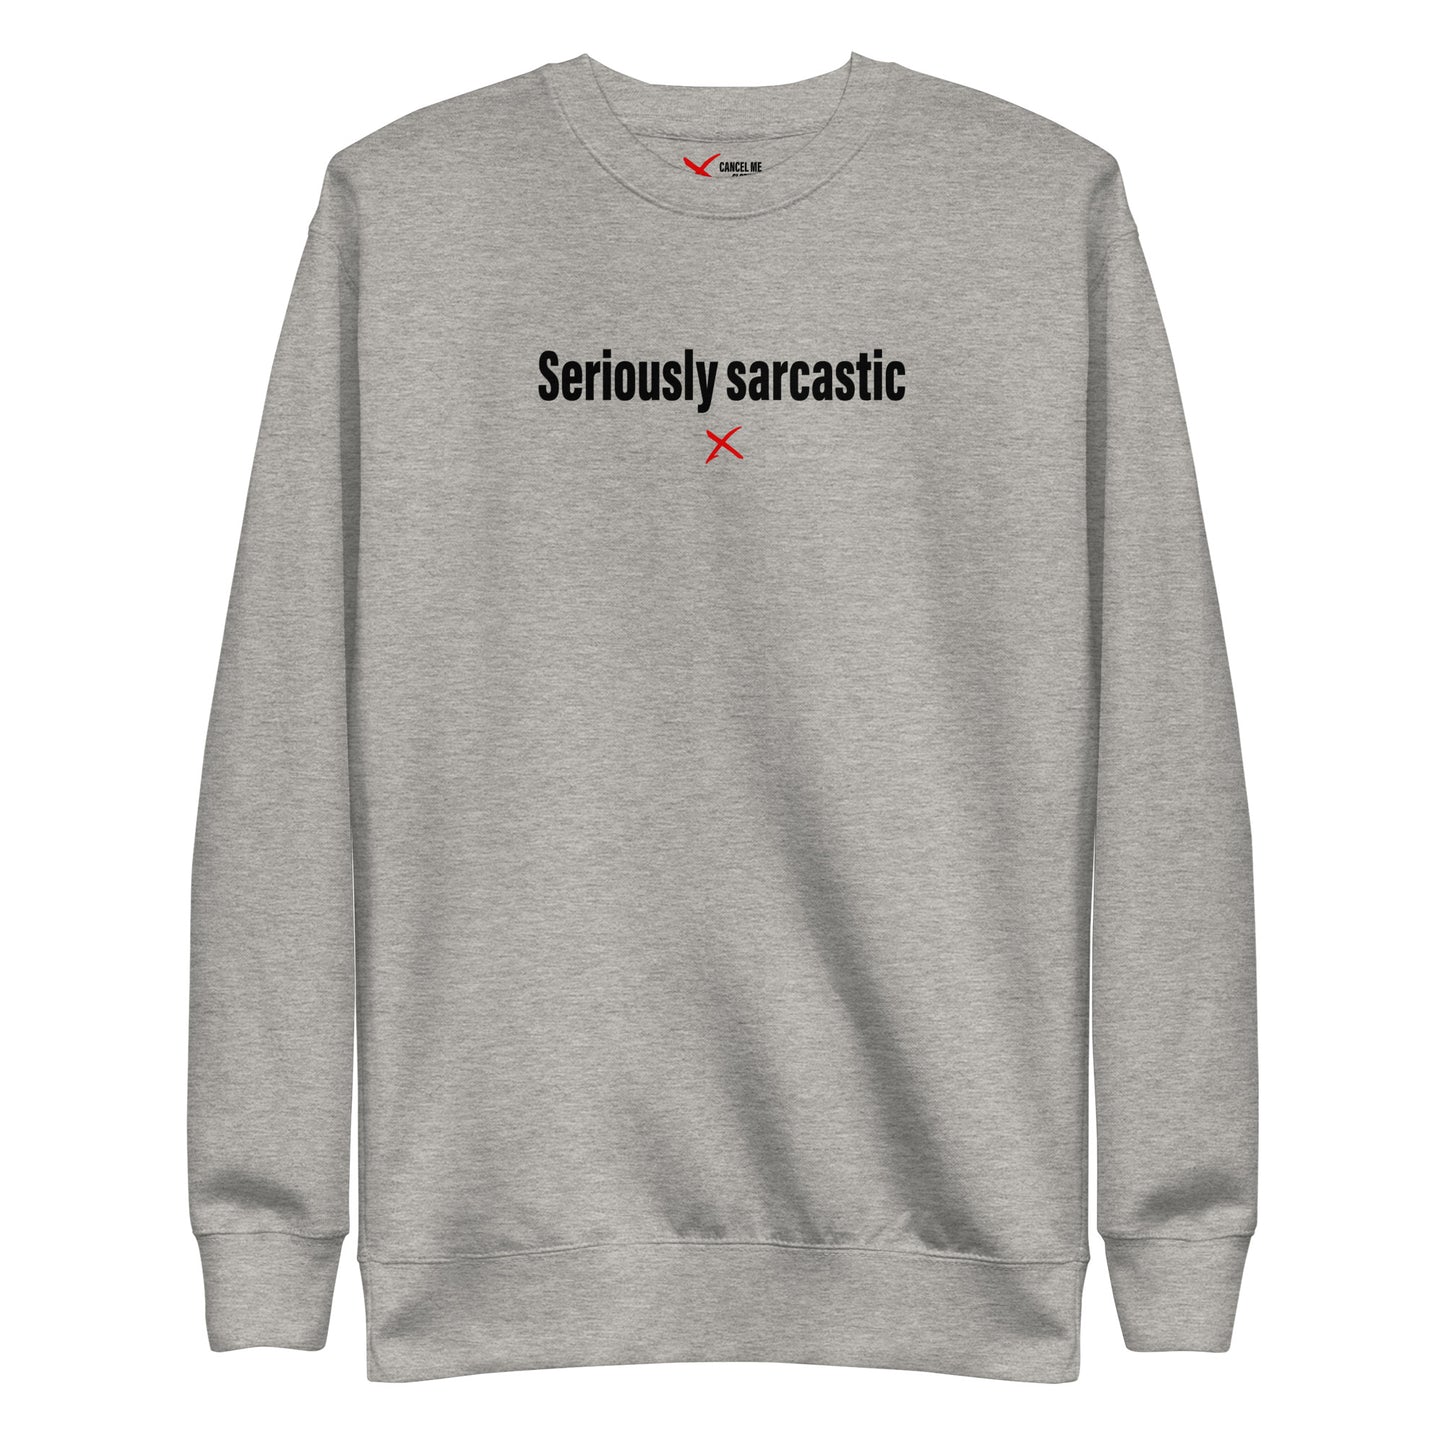 Seriously sarcastic - Sweatshirt